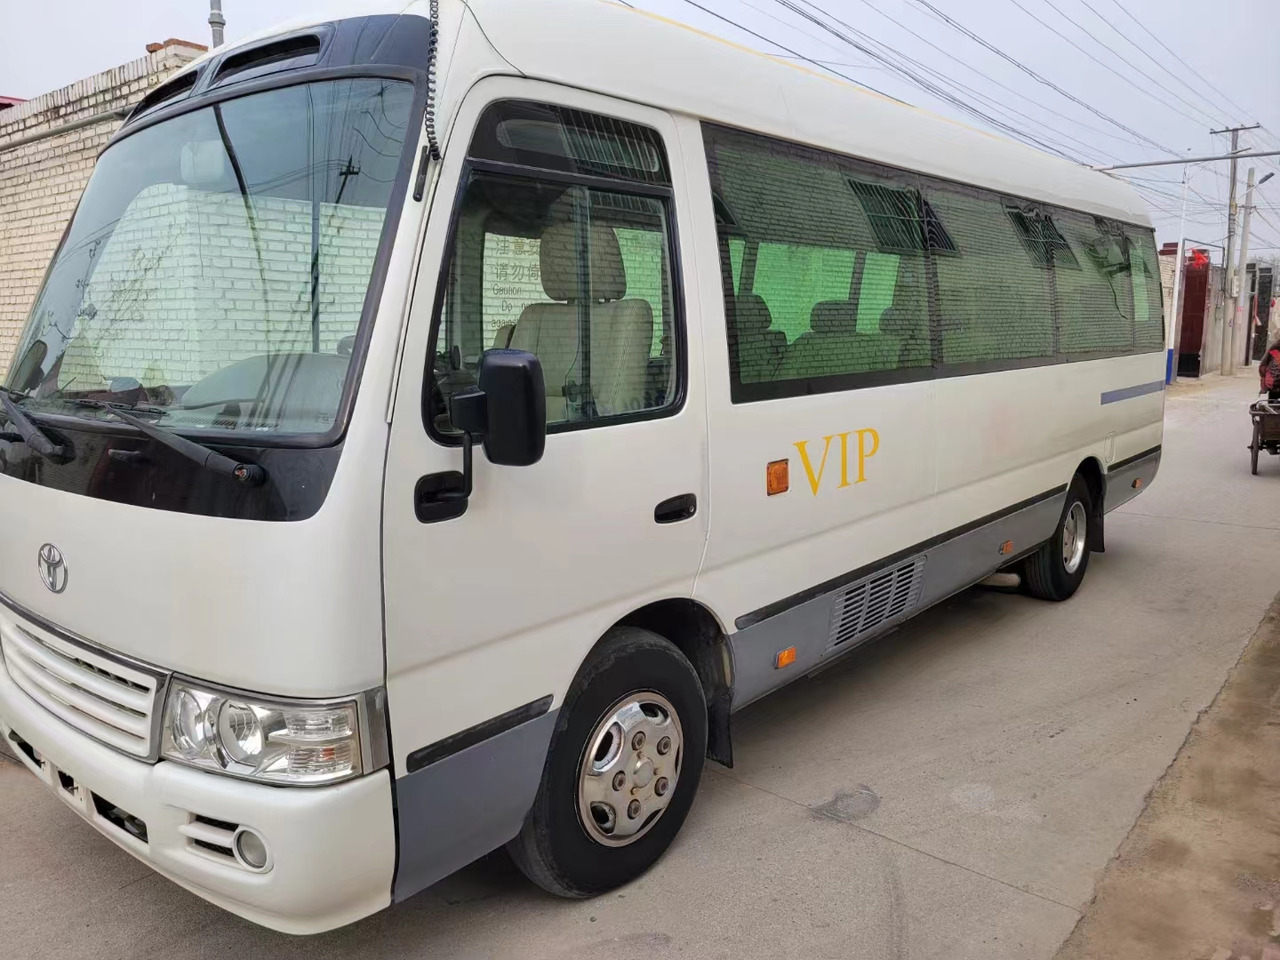 Microbuz, Transport persoane TOYOTA Coaster passenger van city bus coach: Foto 3